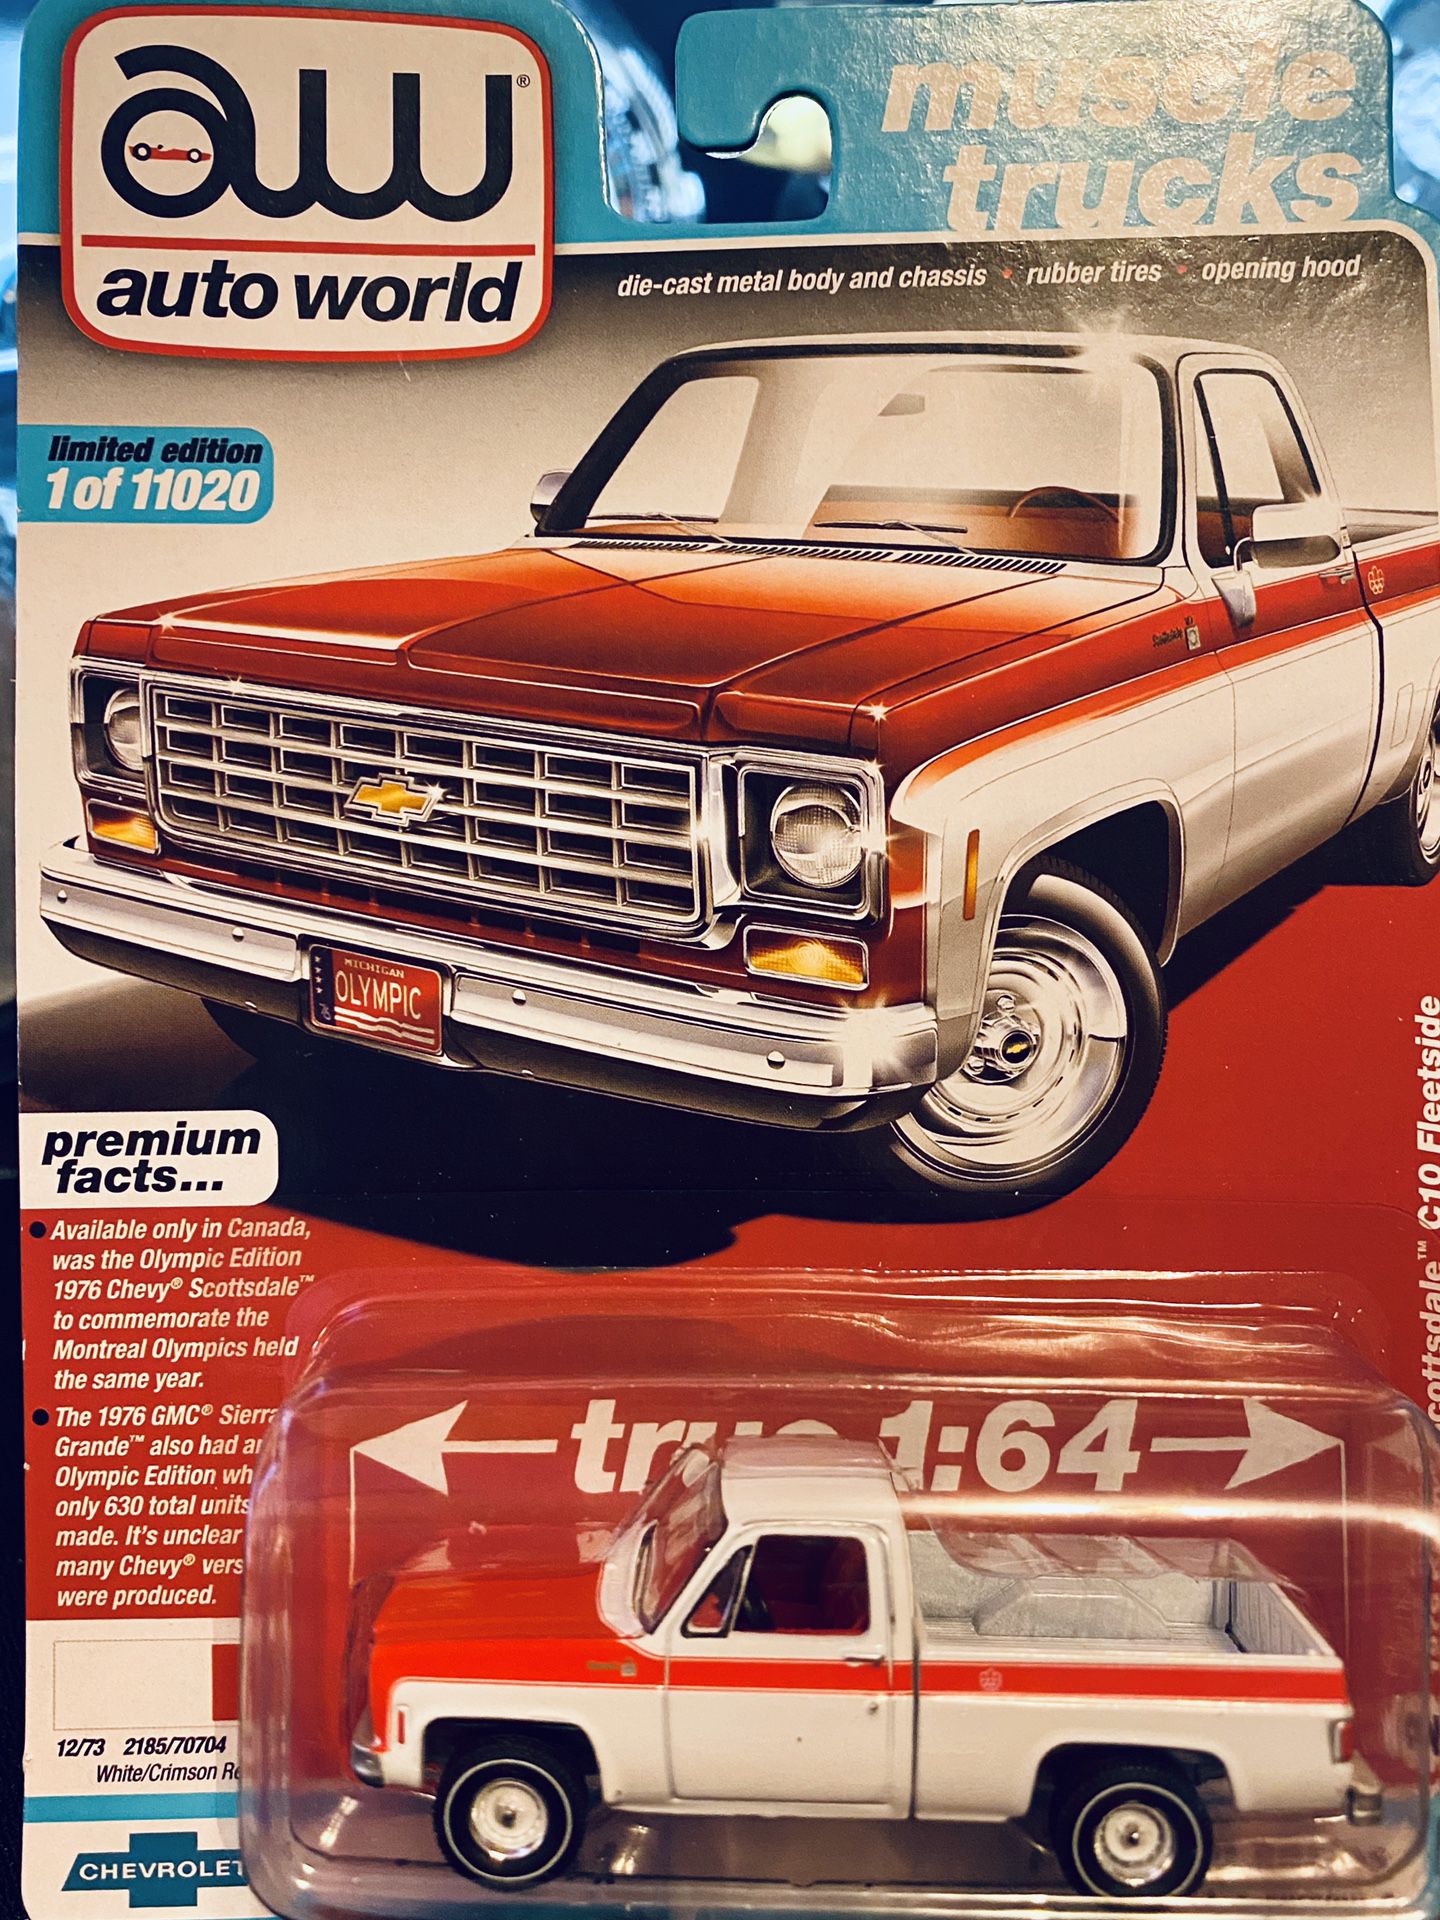 Auto World Muscle Trucks 1976 Chevy Scottsdale C10 Fleetside # 2 release 1 version A 1/11020 new mint